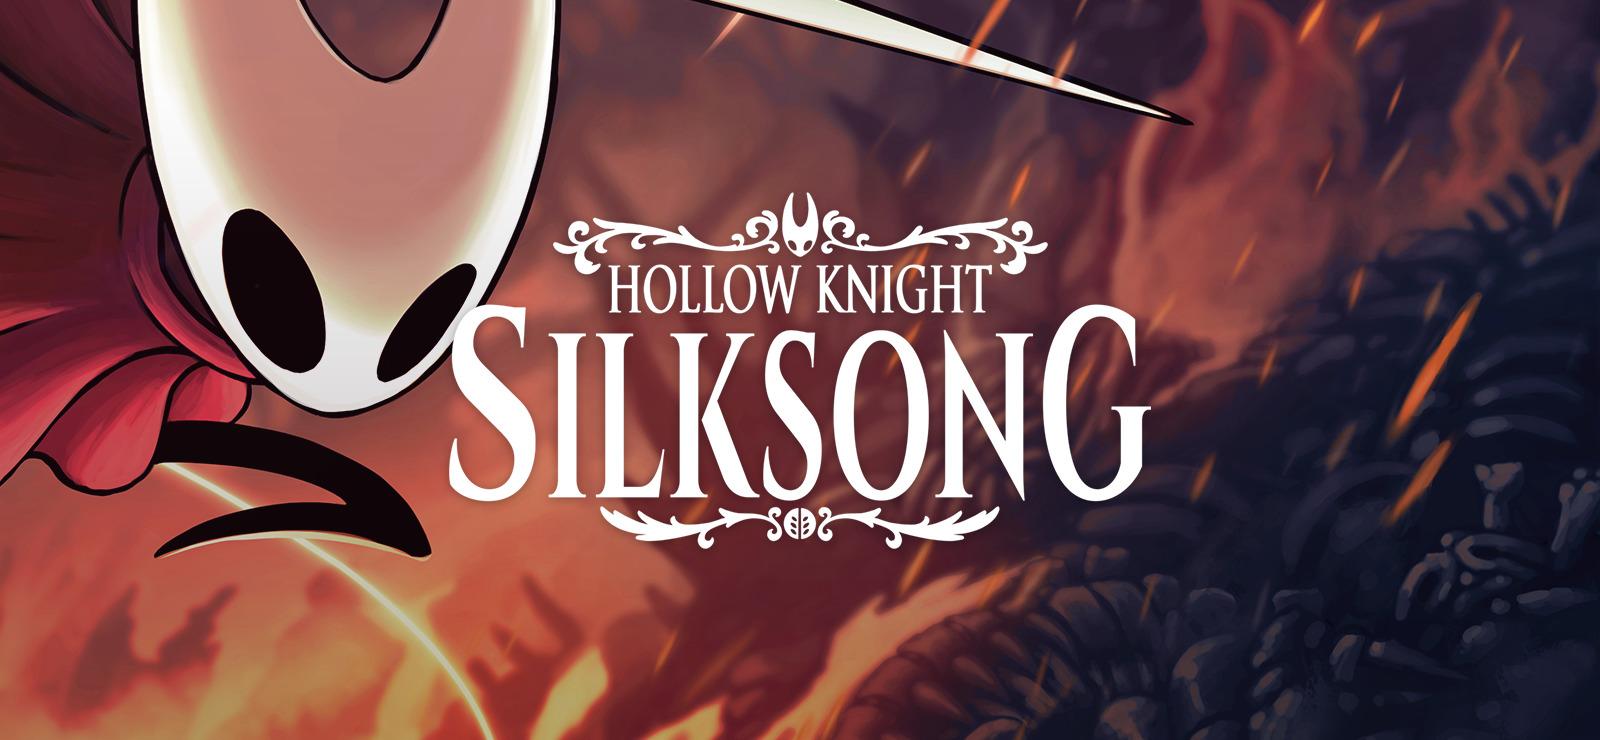 Hollow Knight: Silksong on GOG.com